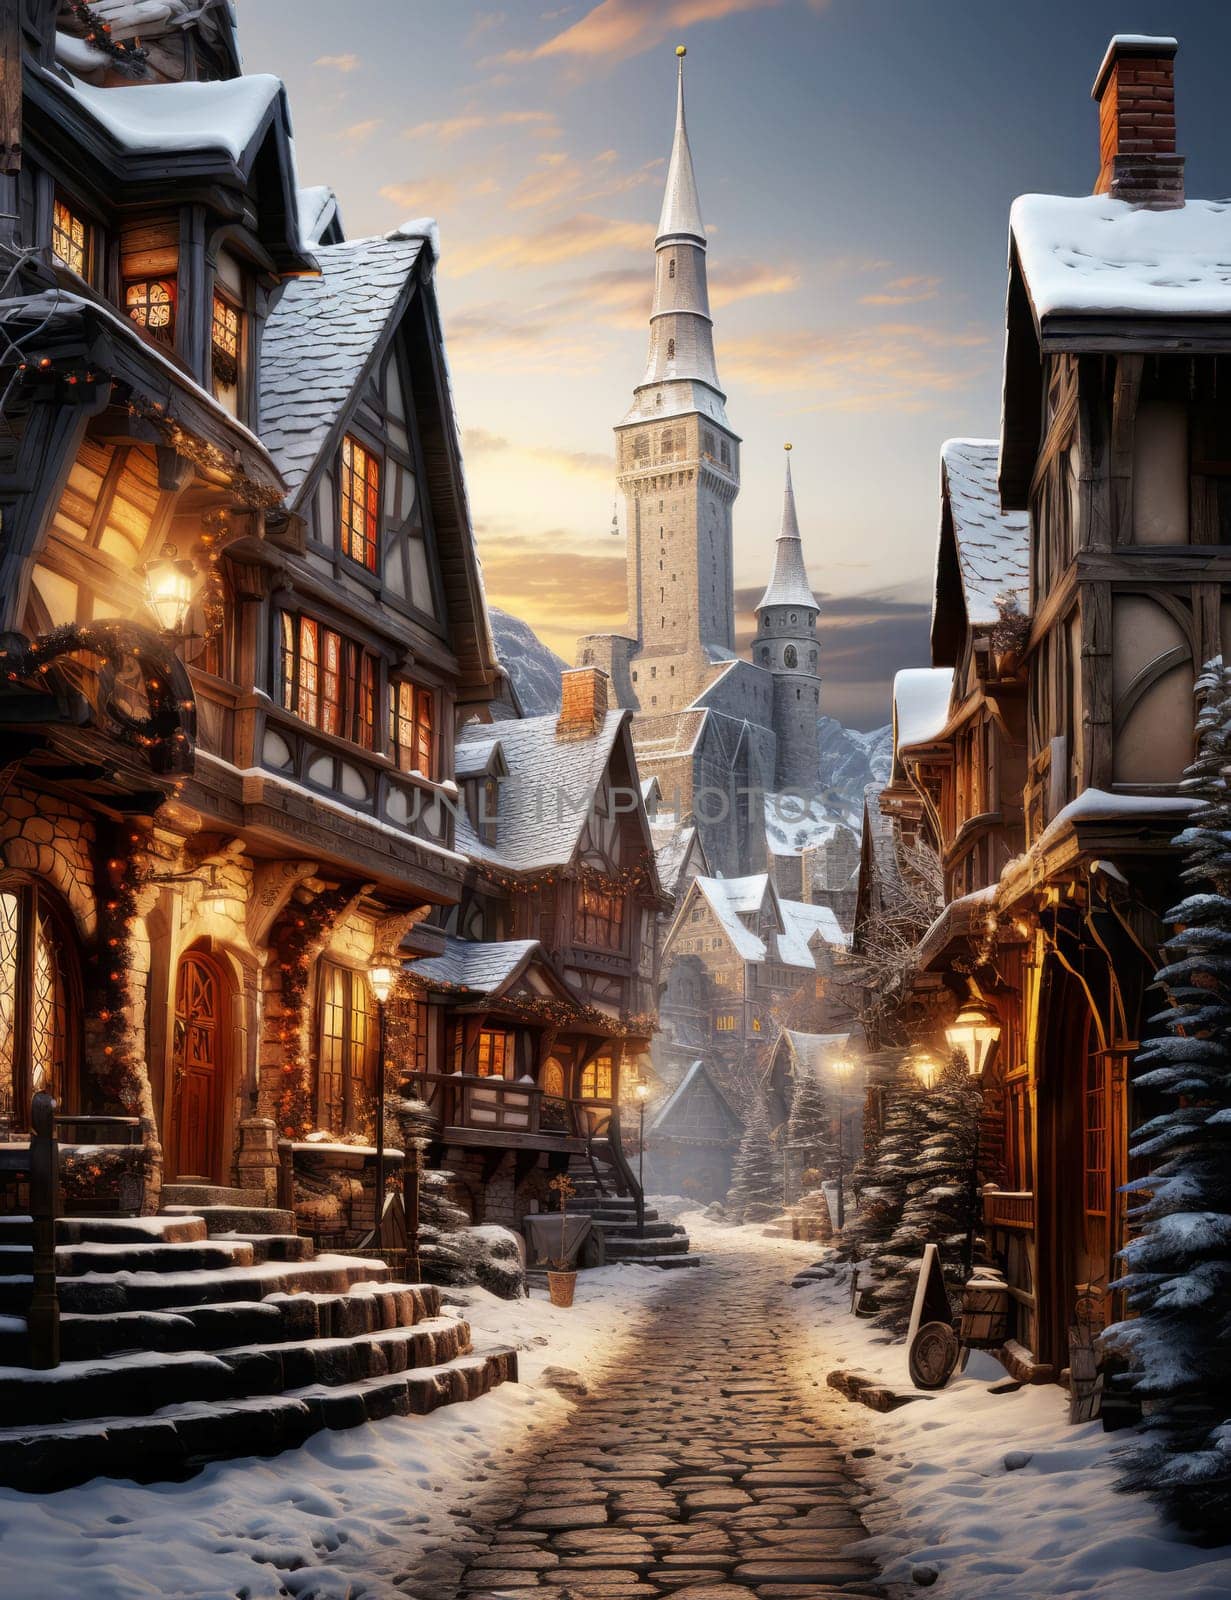 Christmas village at dawn by NataliPopova